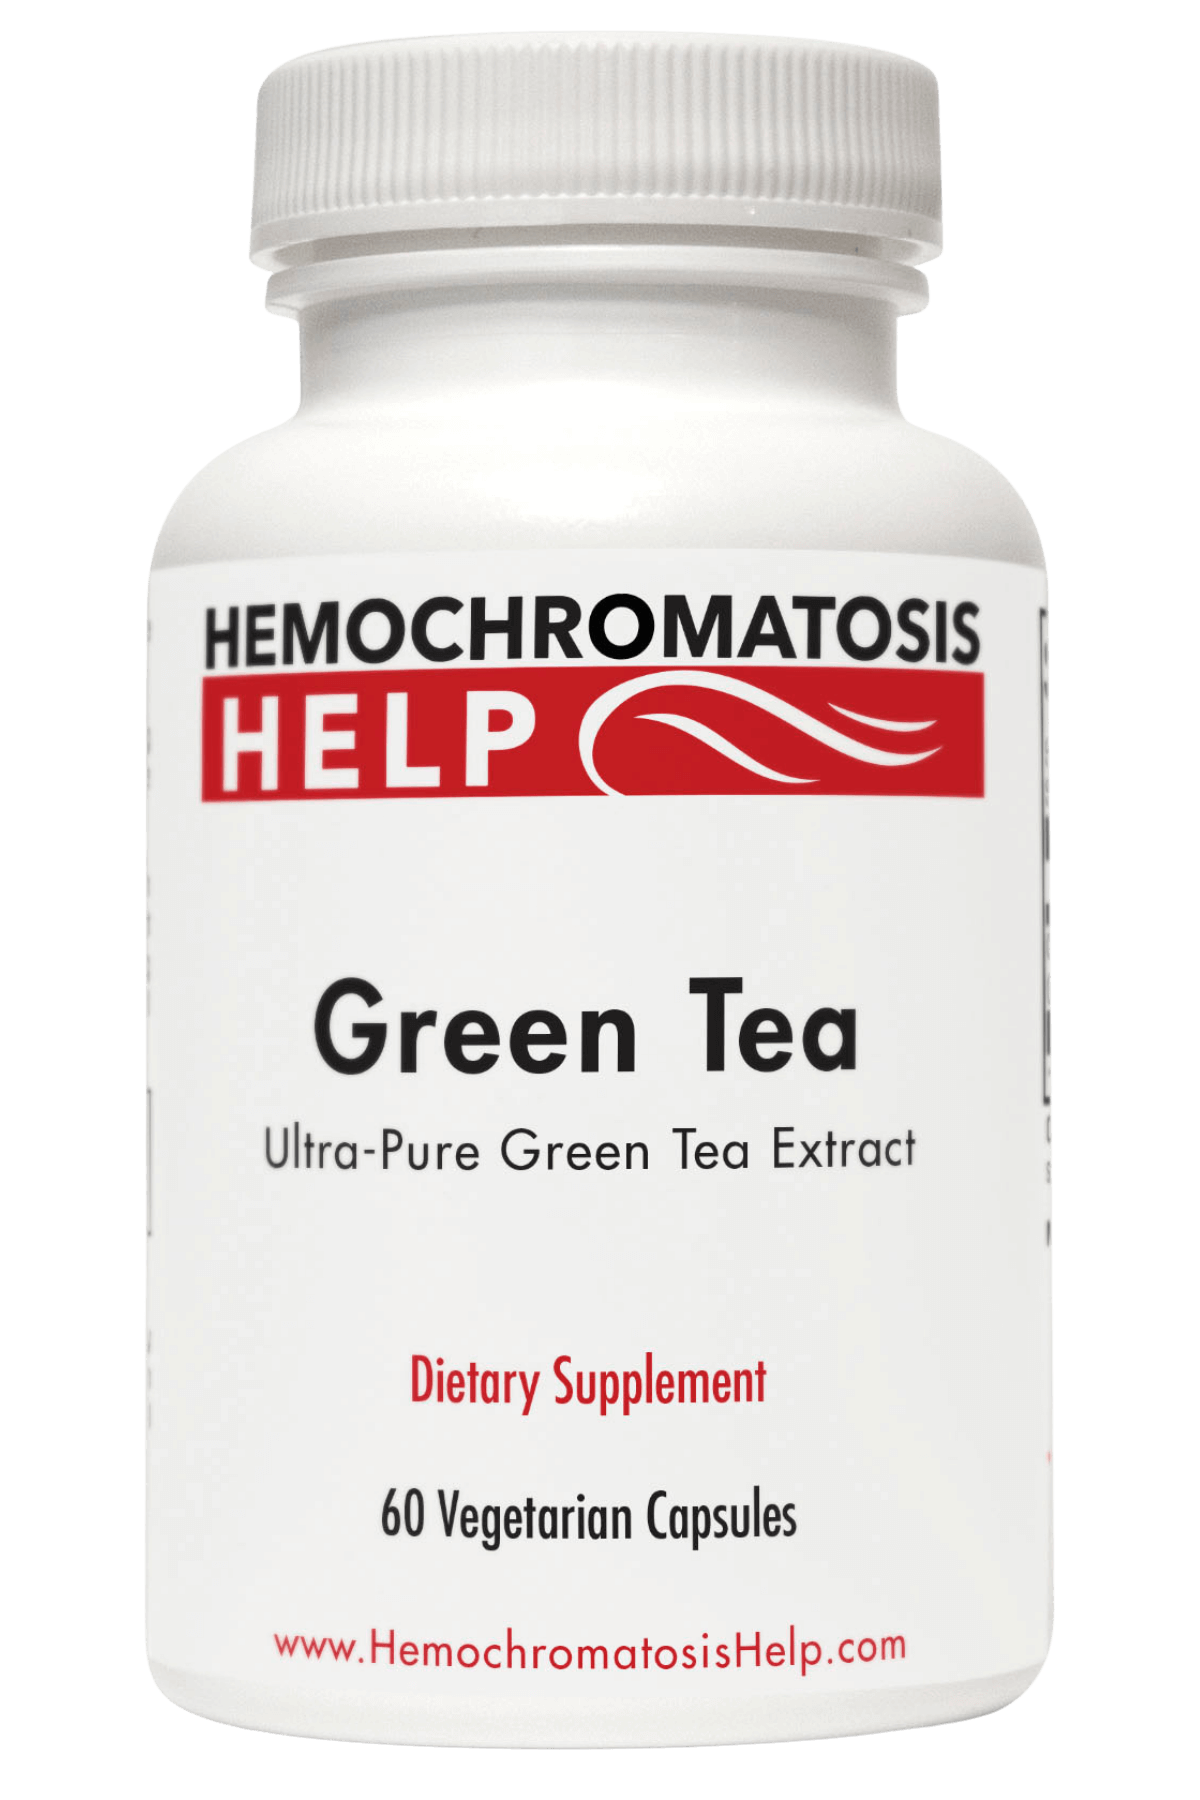 Hemochromatosis Help Green Tea Capsules Bottle